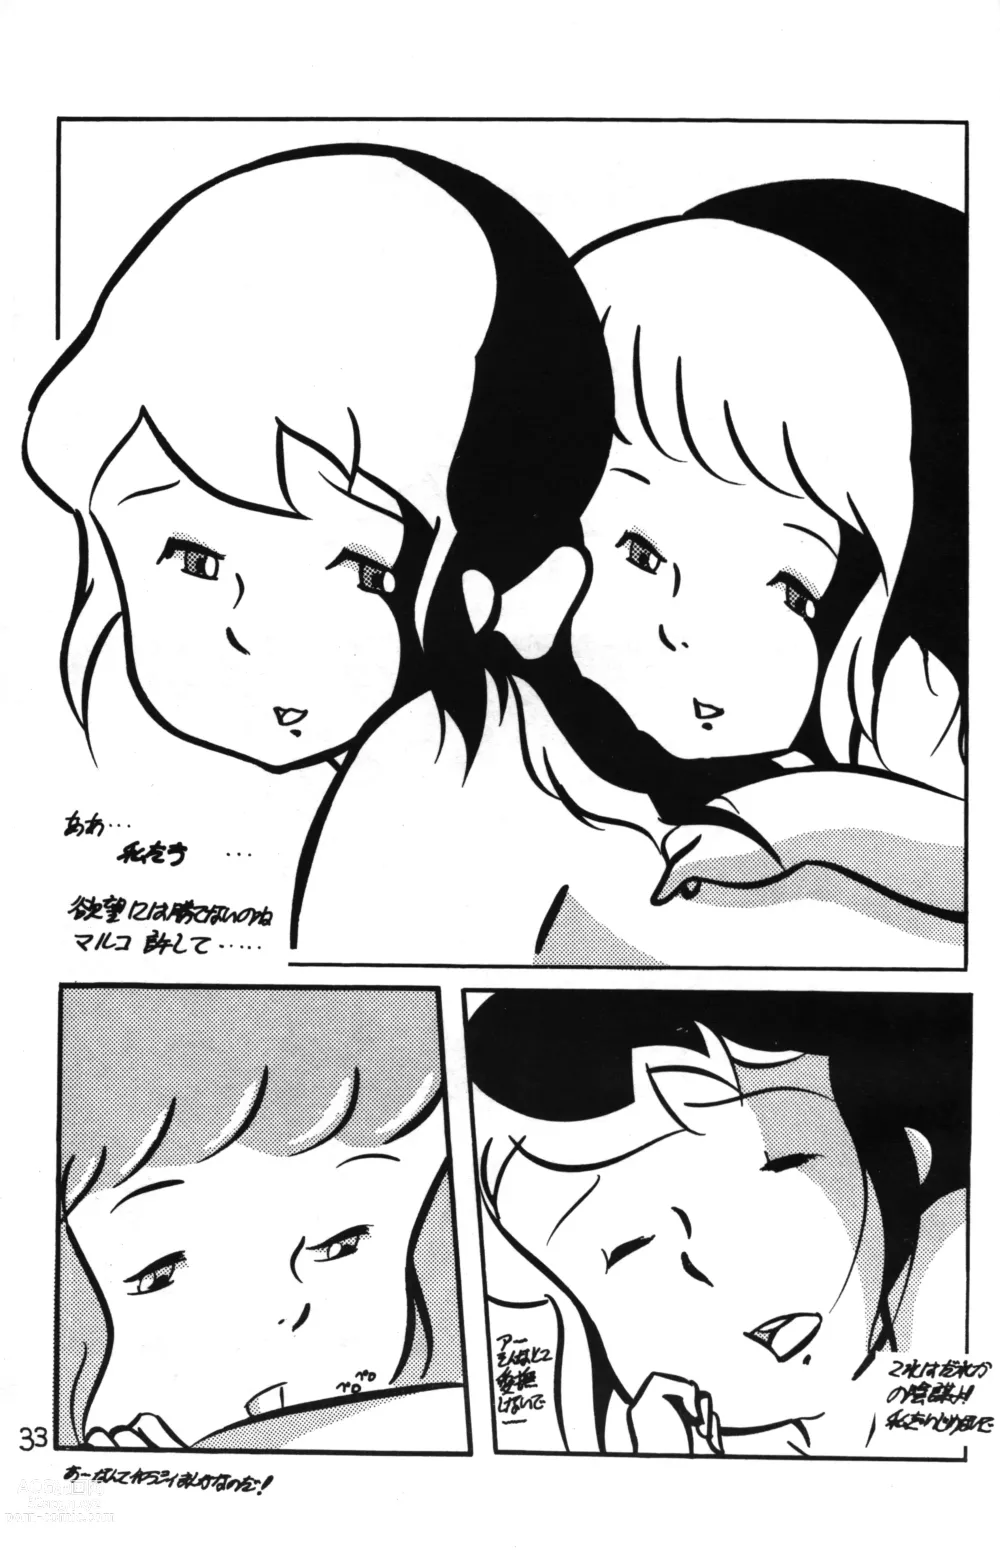 Page 33 of doujinshi Lana-chan World 3